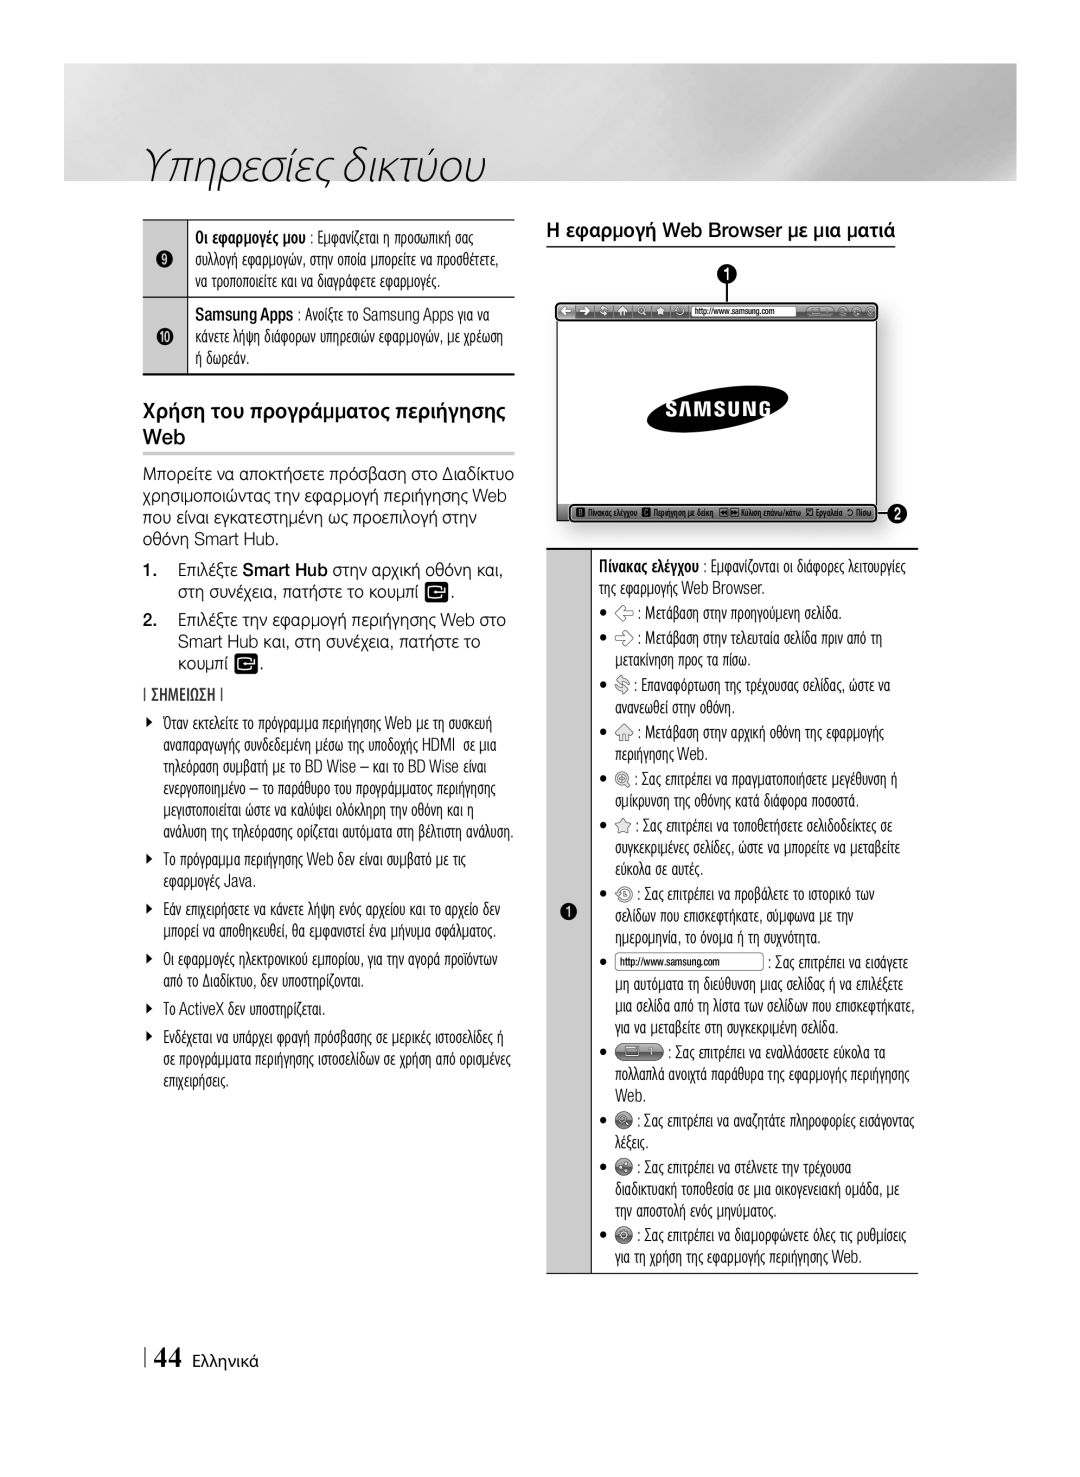 Samsung BD-E6100/EN manual Χρήση του προγράμματος περιήγησης Web, Εφαρμογή Web Browser με μια ματιά 